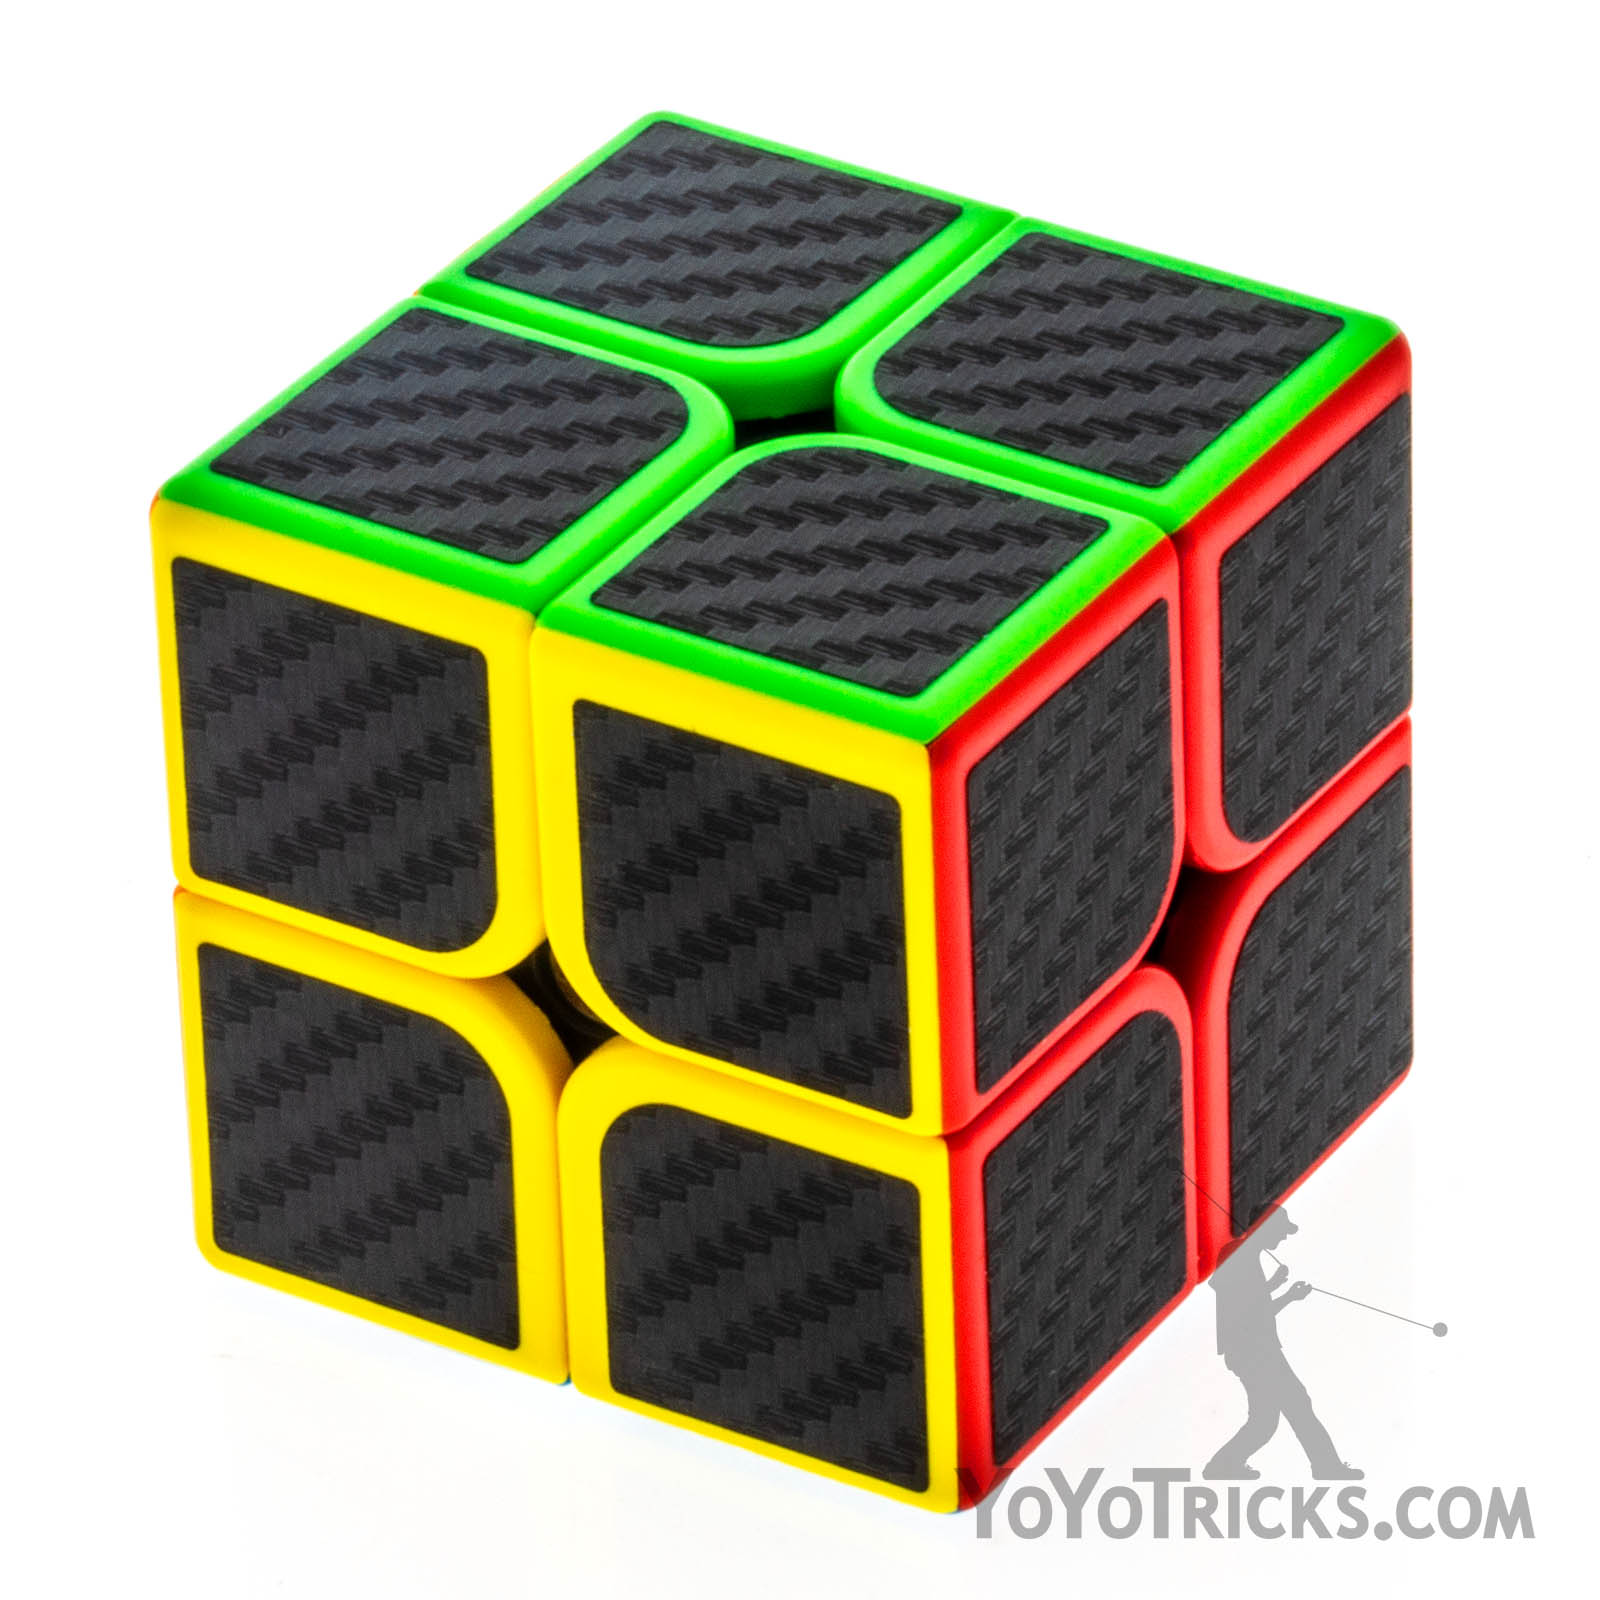 https://yoyotricks.com/wp-content/uploads/2022/09/Inverted-Colors-2x2-Speed-Cube-copy.jpg